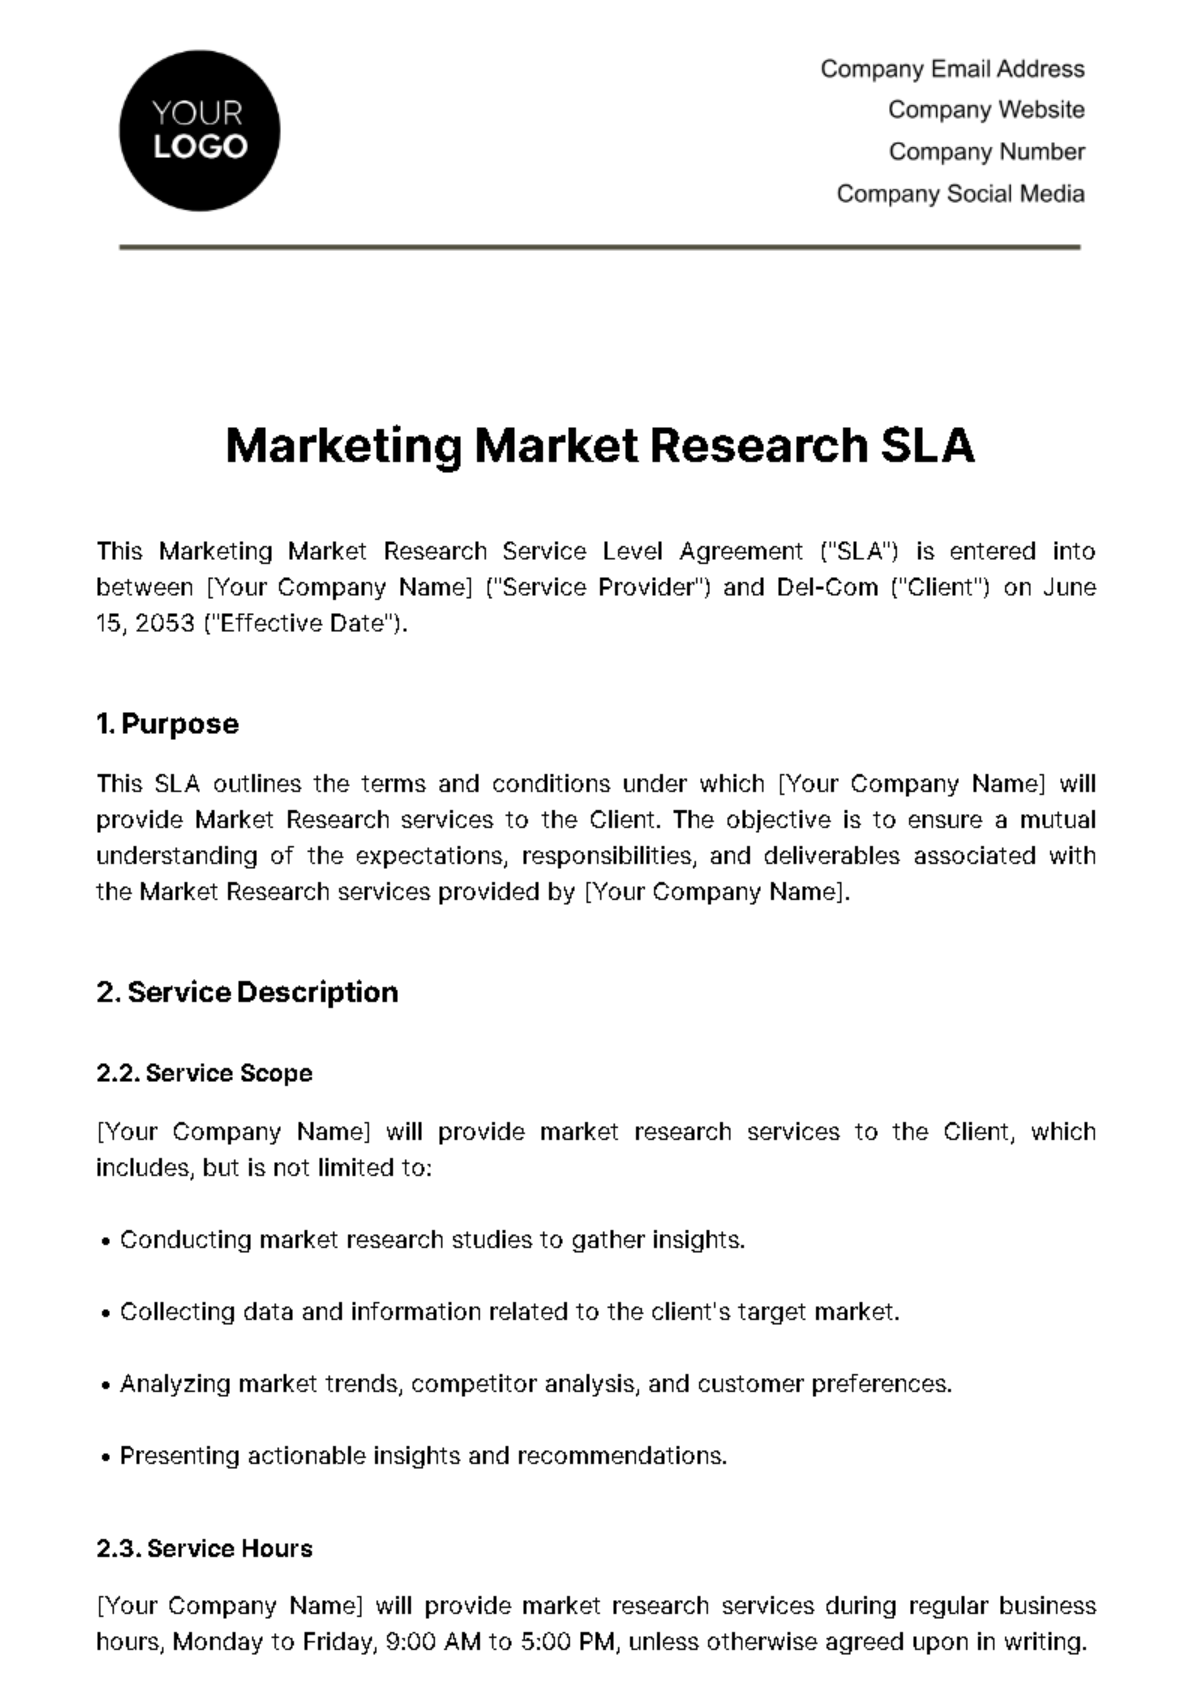 Free Marketing Market Research SLA Template